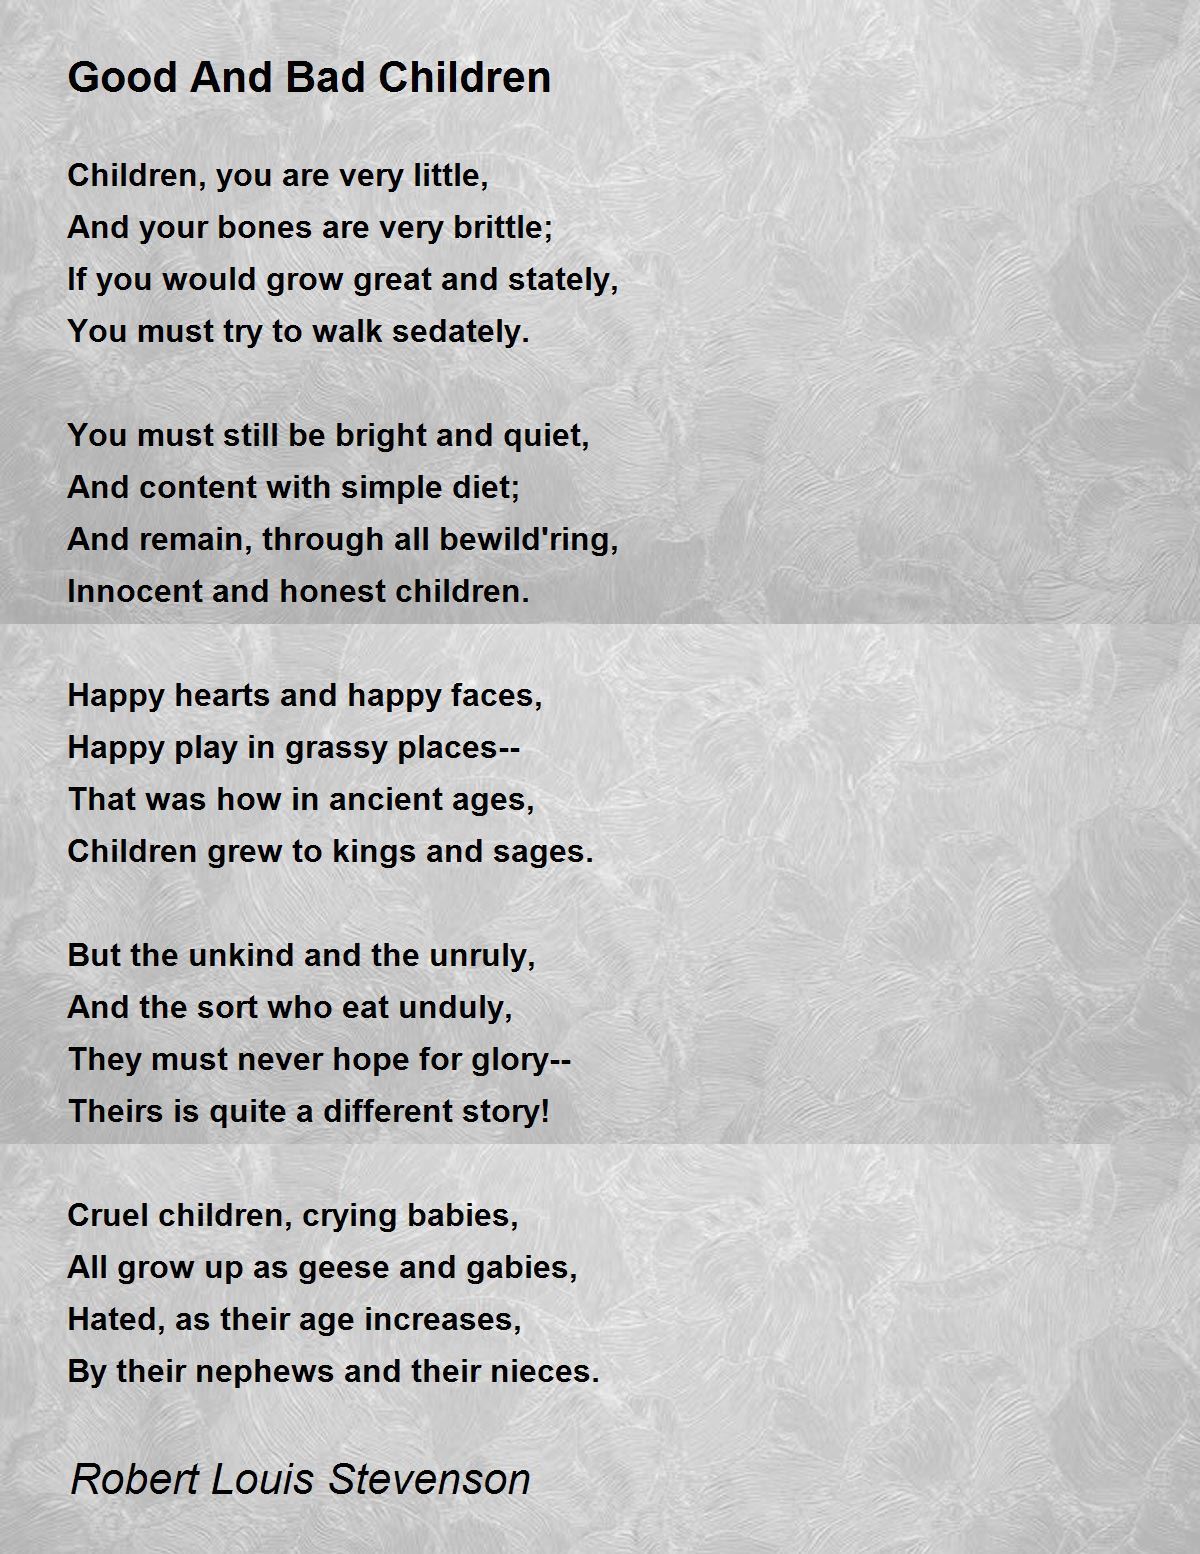 Good And Bad Children Poem by Robert Louis Stevenson - Poem Hunter